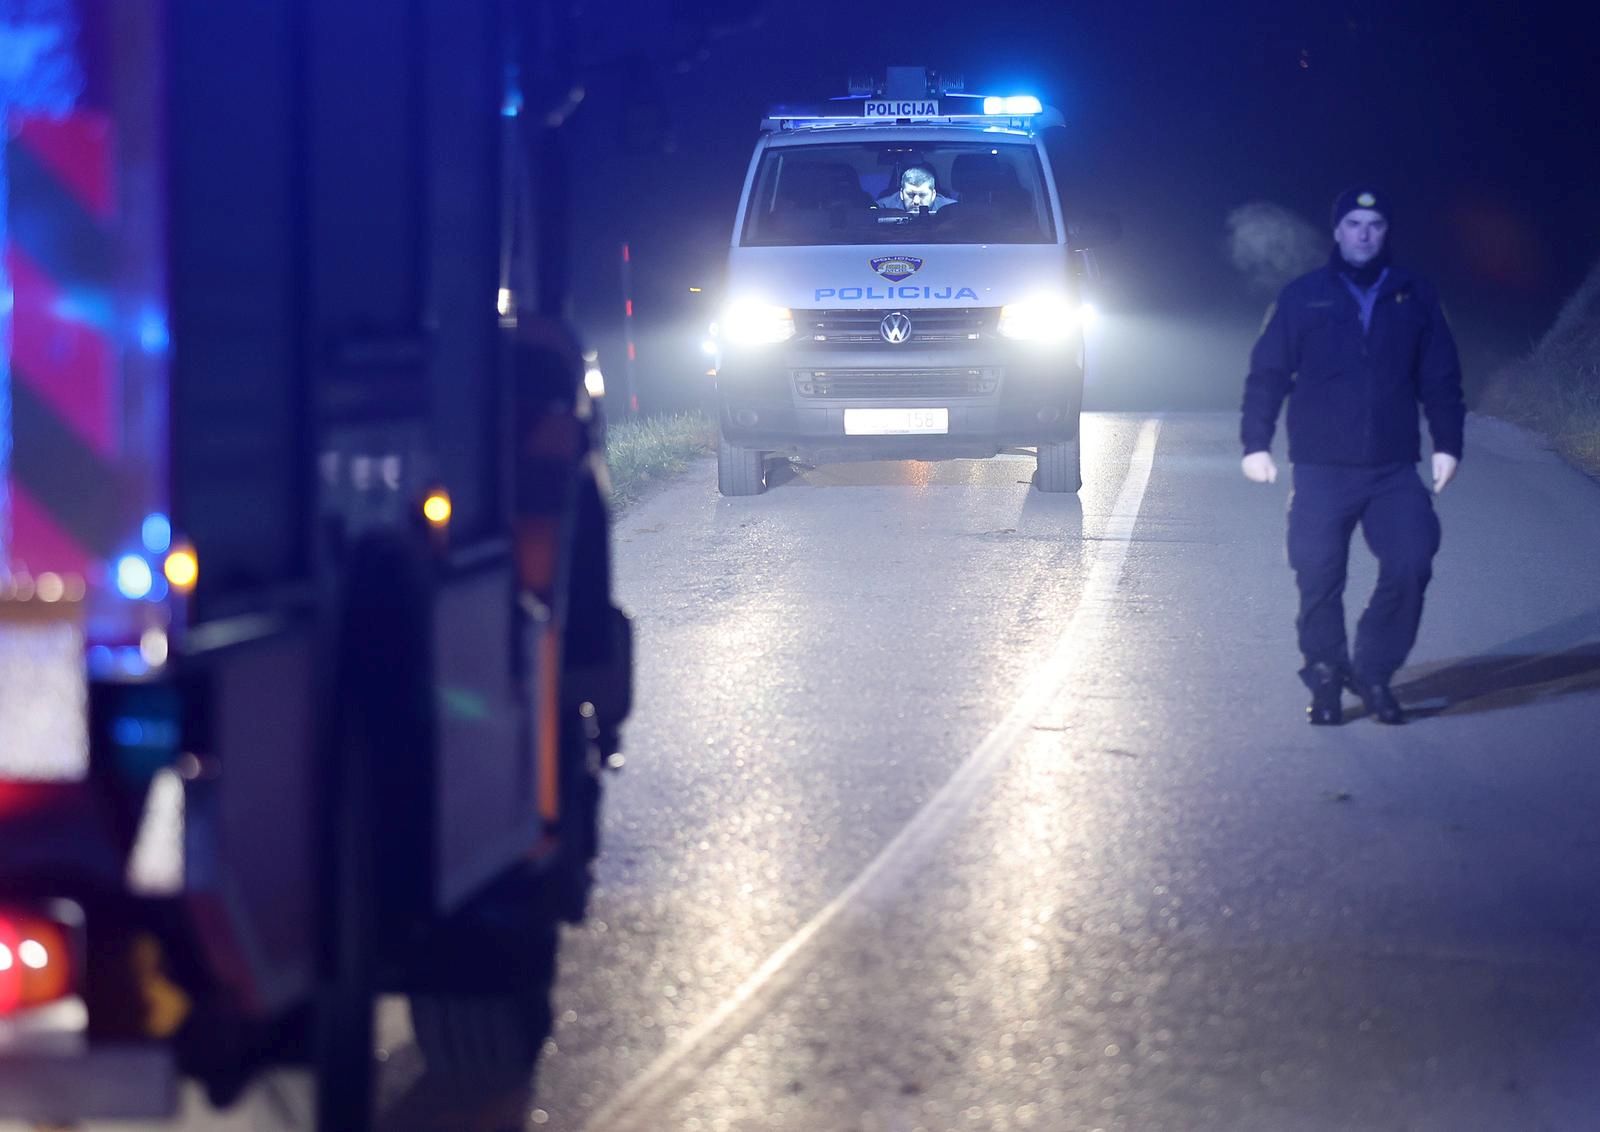 20.11.2021., Gornja Drenova - Prometna nesreca sa smrtnim slucajem. Policija obavlja ocevid na mjestu gdje je vozilo sletilo u kanal.